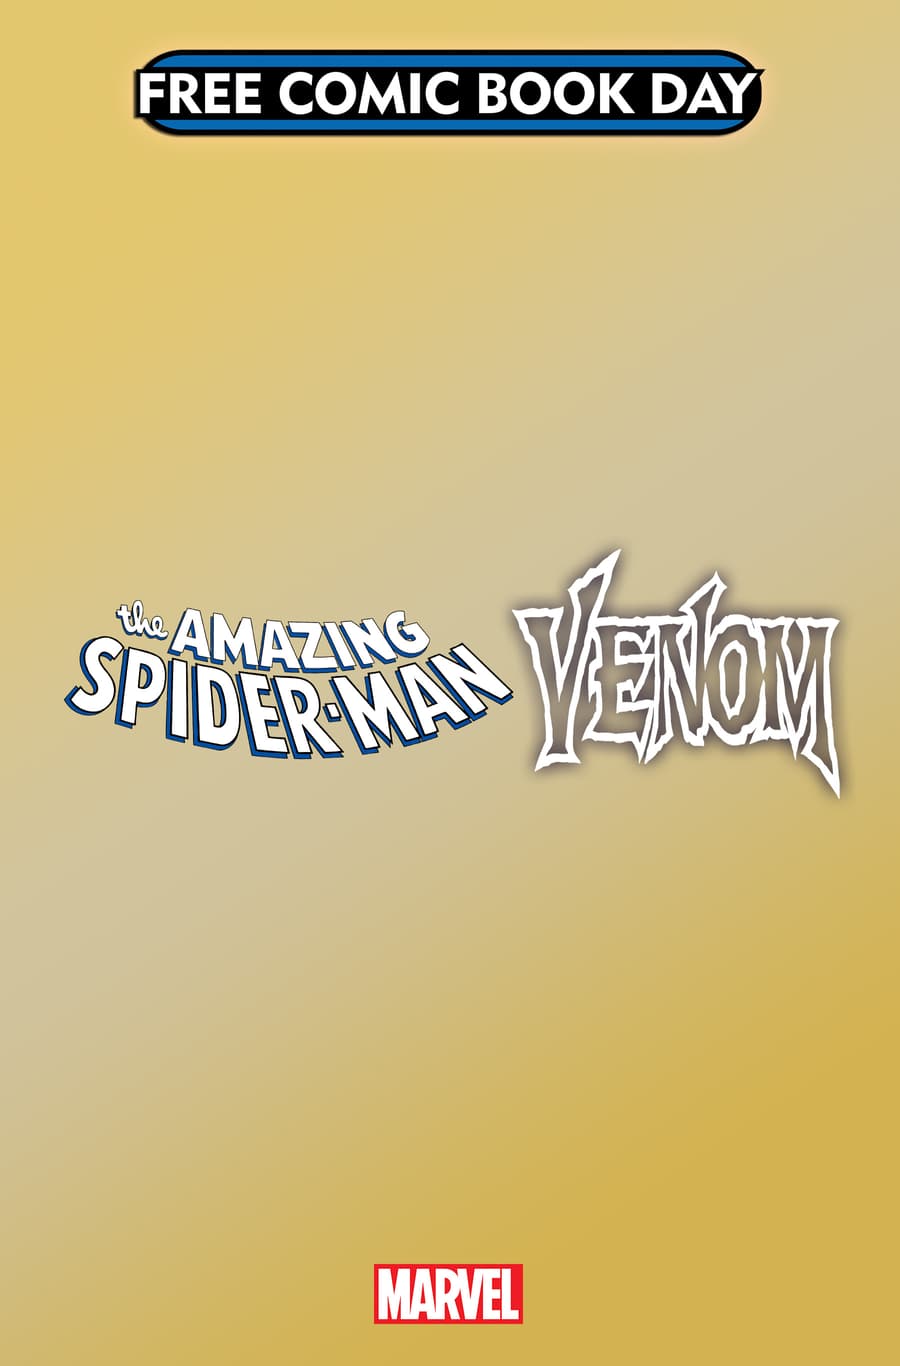 FREE COMIC BOOK DAY: SPIDER-MAN/VENOM #1